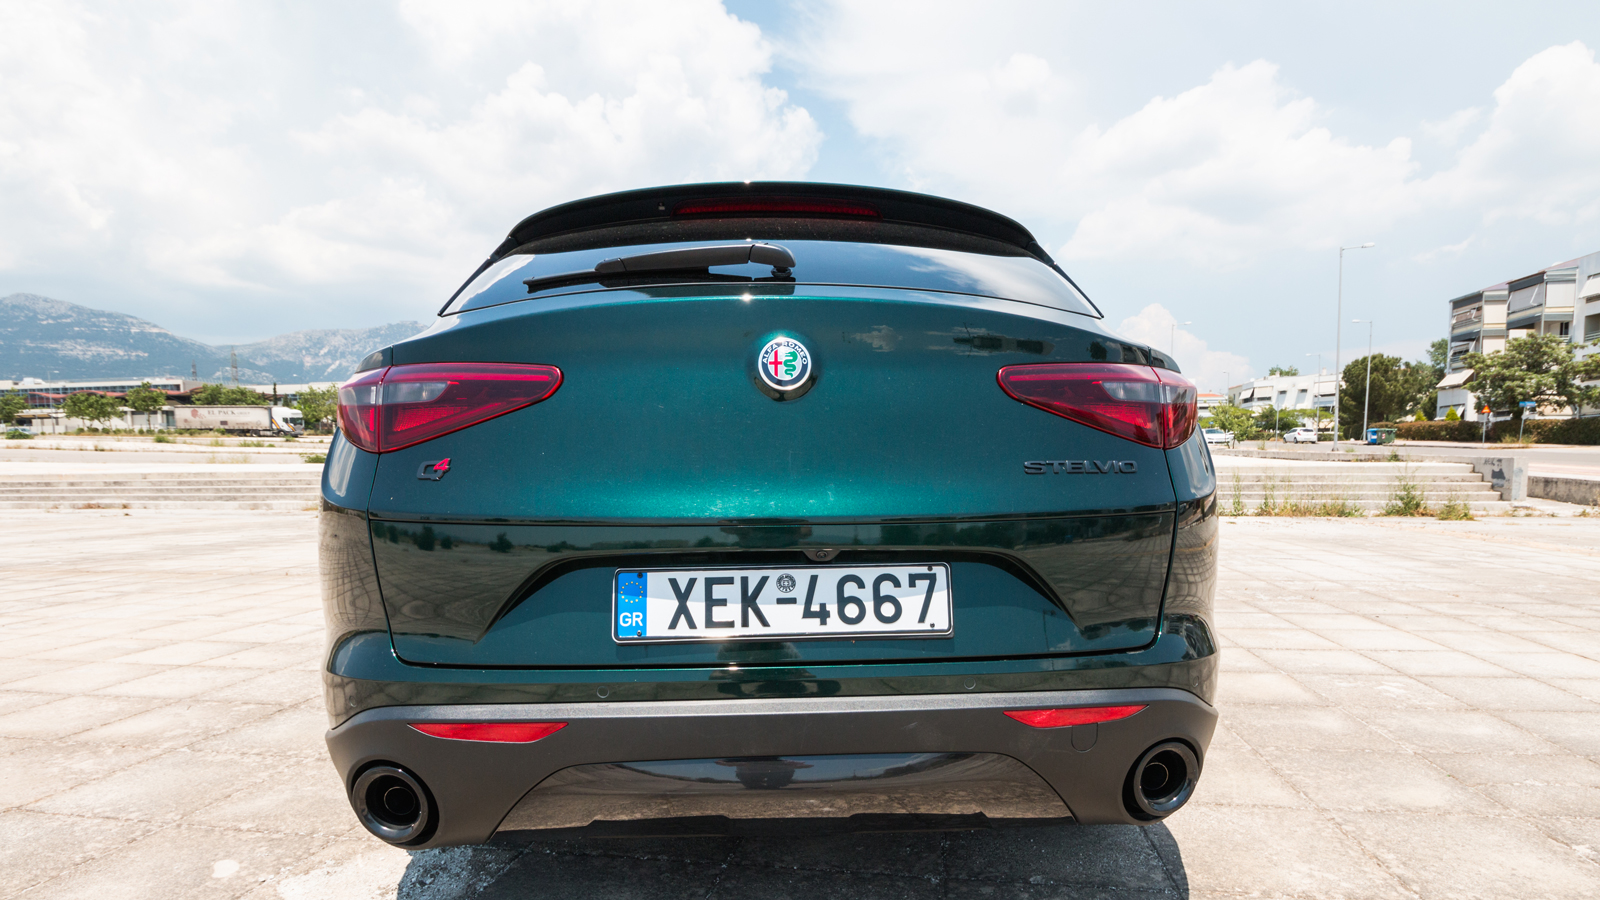 Alfa Romeo Stelvio Diesel: Ιταλική κομψότητα με σκοτσέζικη οικονομία